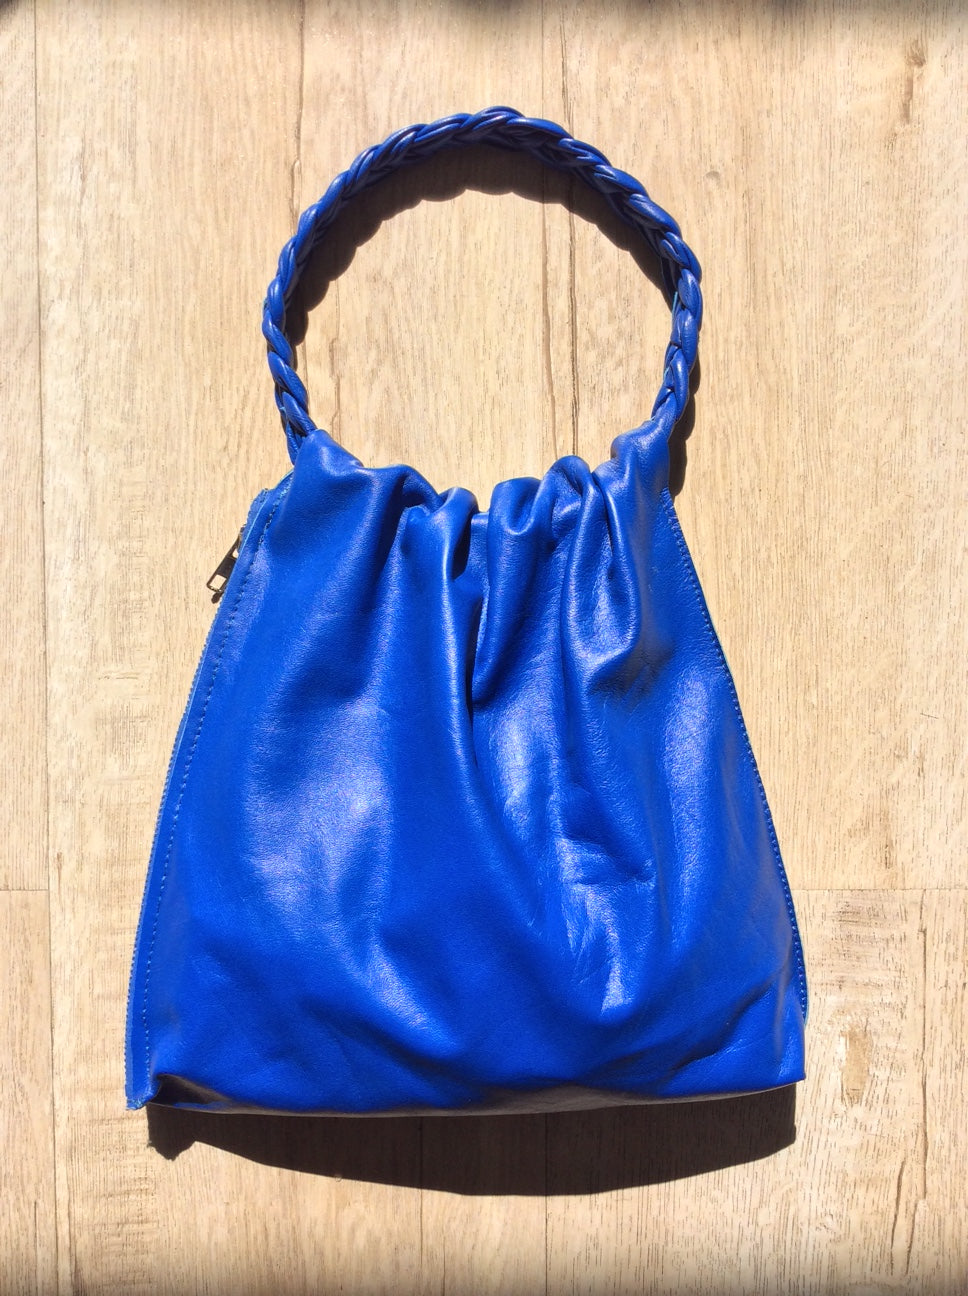 Blue Clutch Bag Ladies Royal Blue Evening Shoulder Bag Handbag Faux Suede